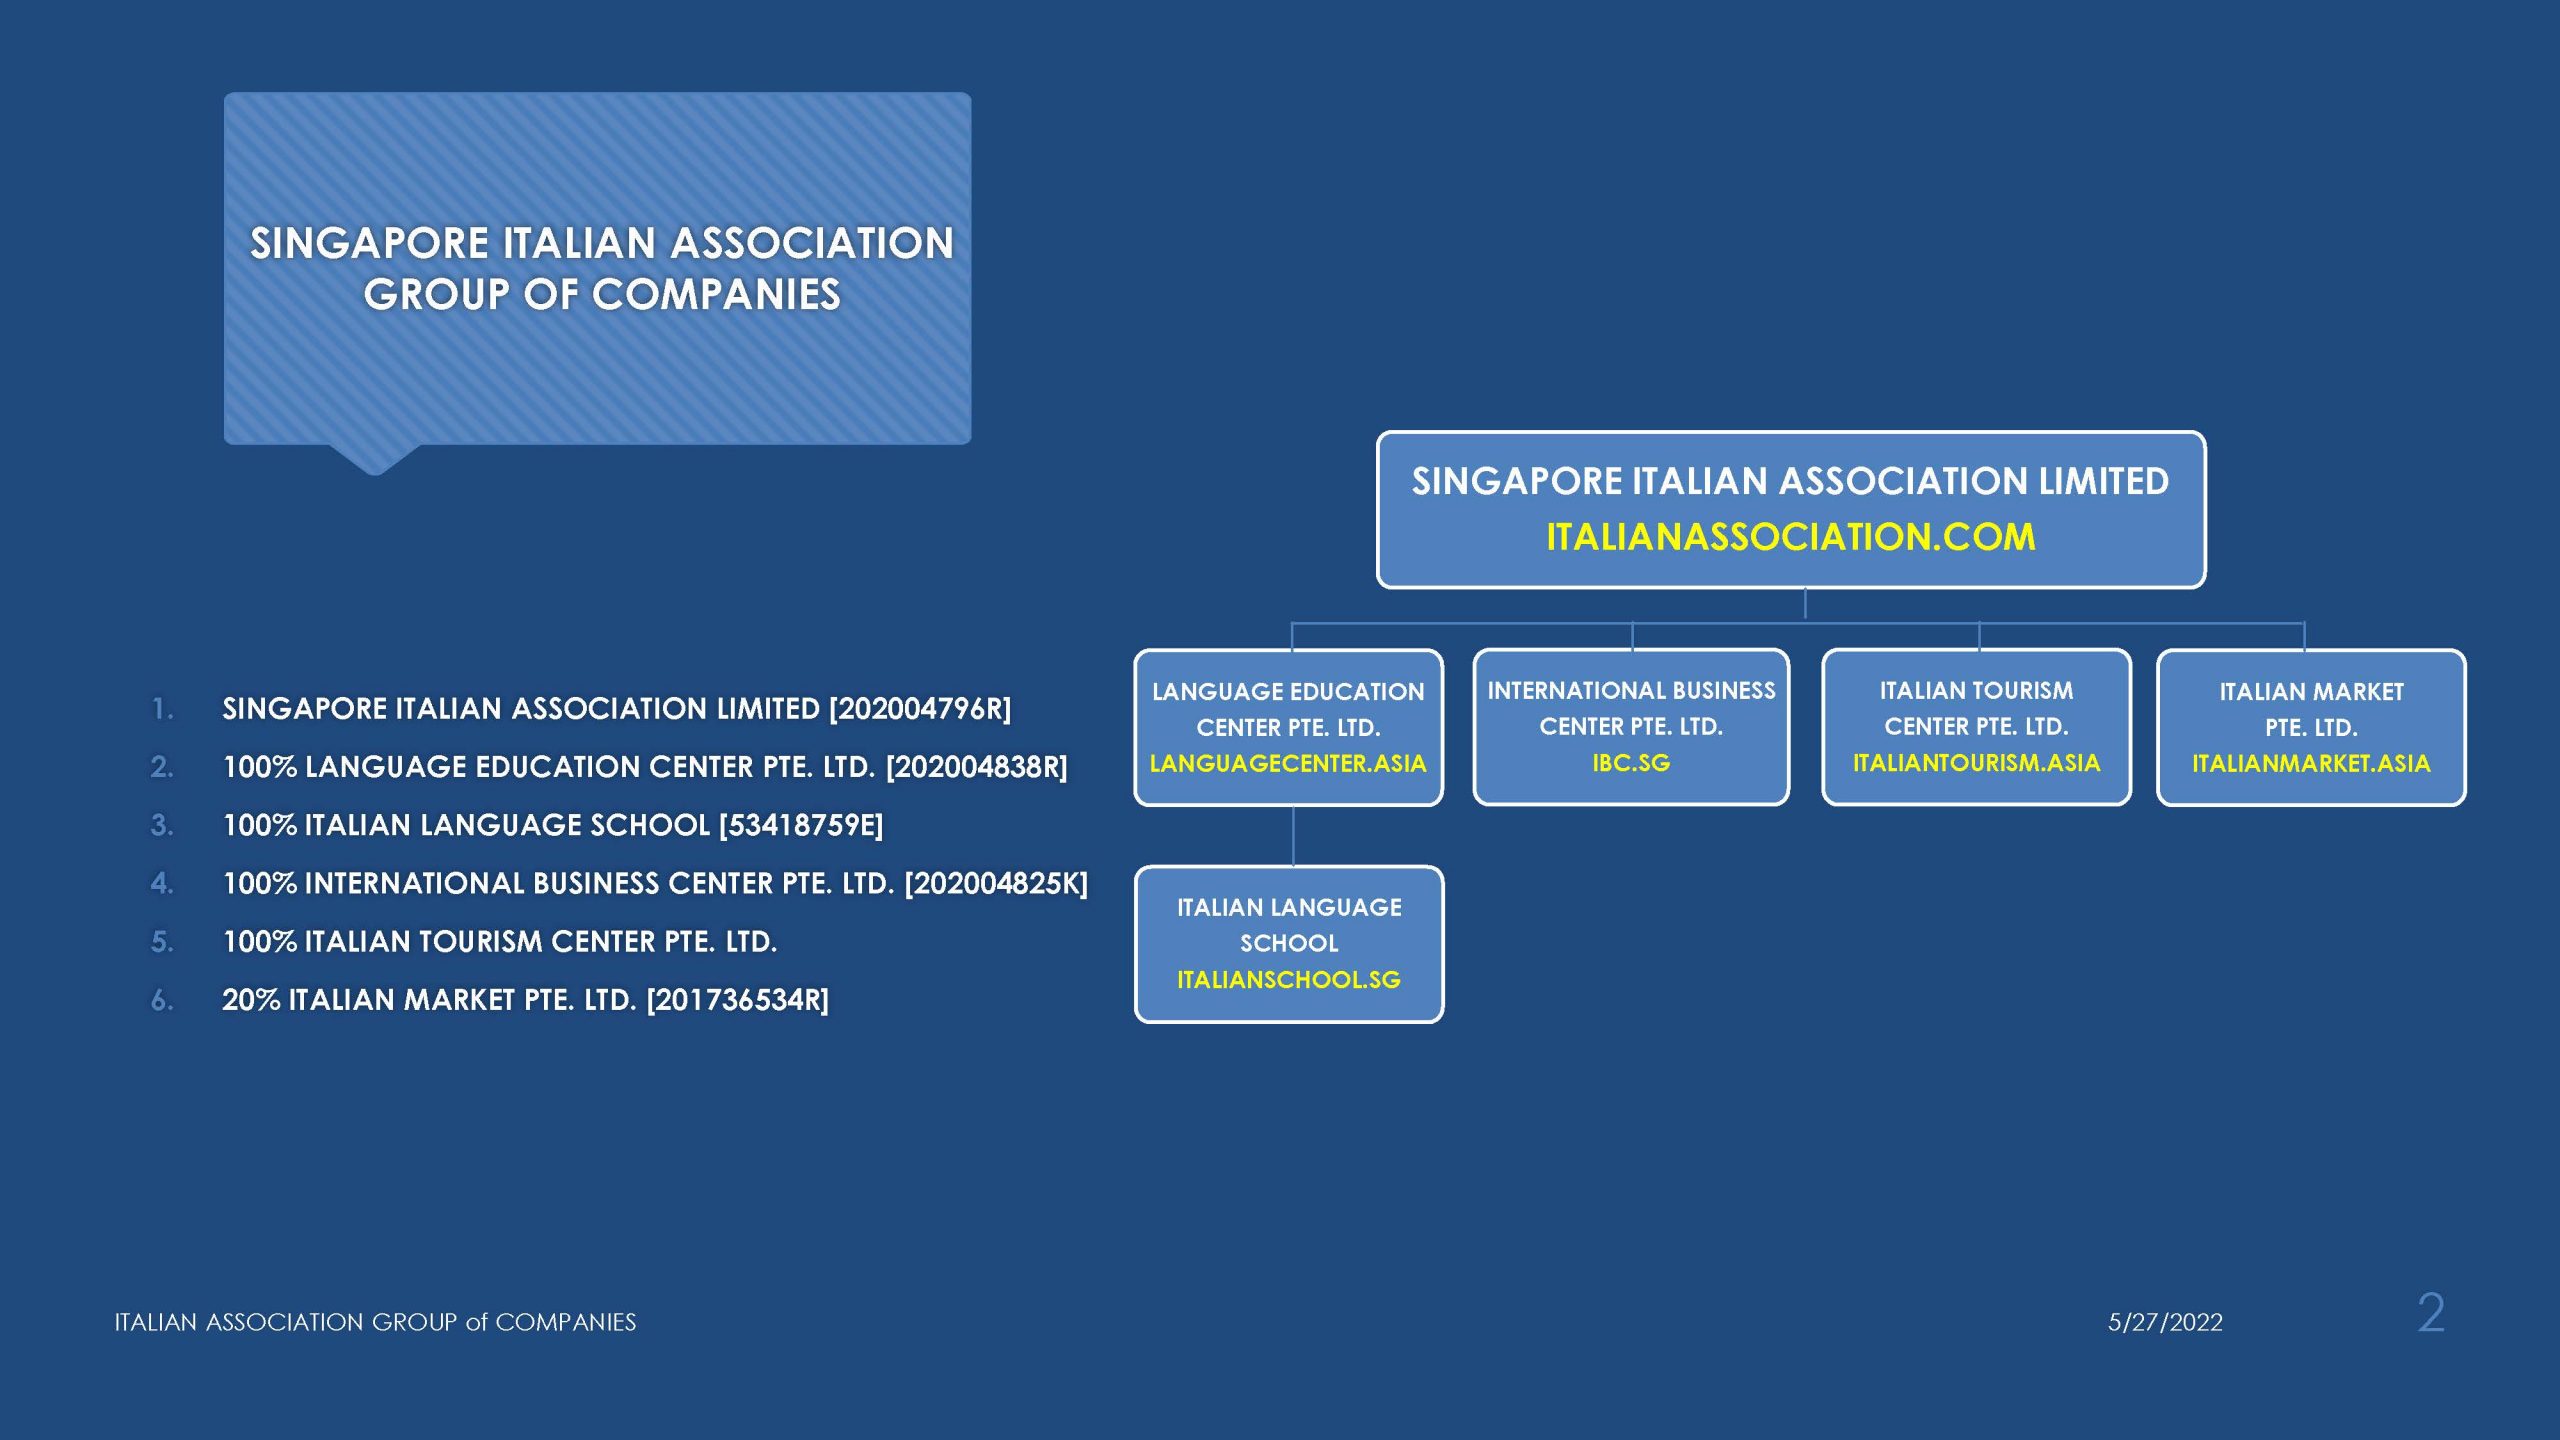 Singapore Italian Association Group of Companies